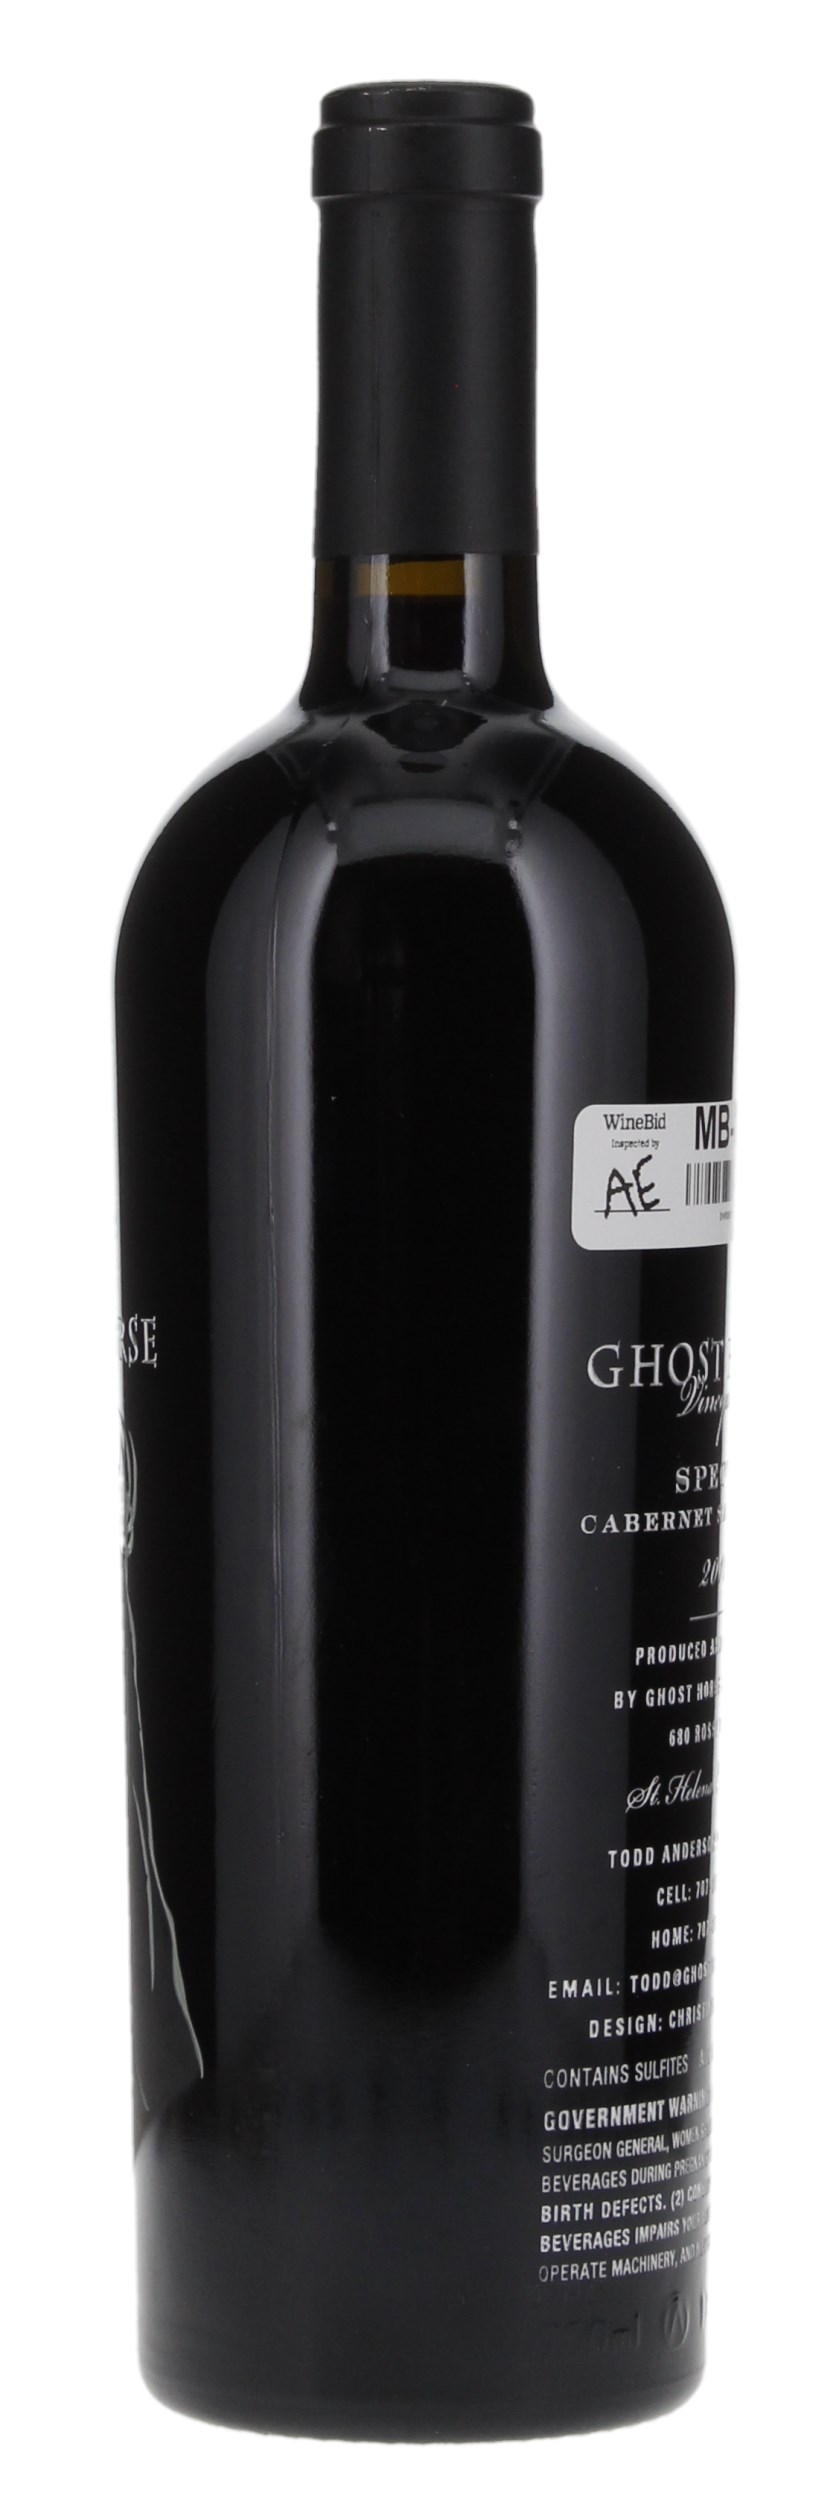 2010 Ghost Horse Vineyard Spectre Cabernet Sauvignon, 750ml